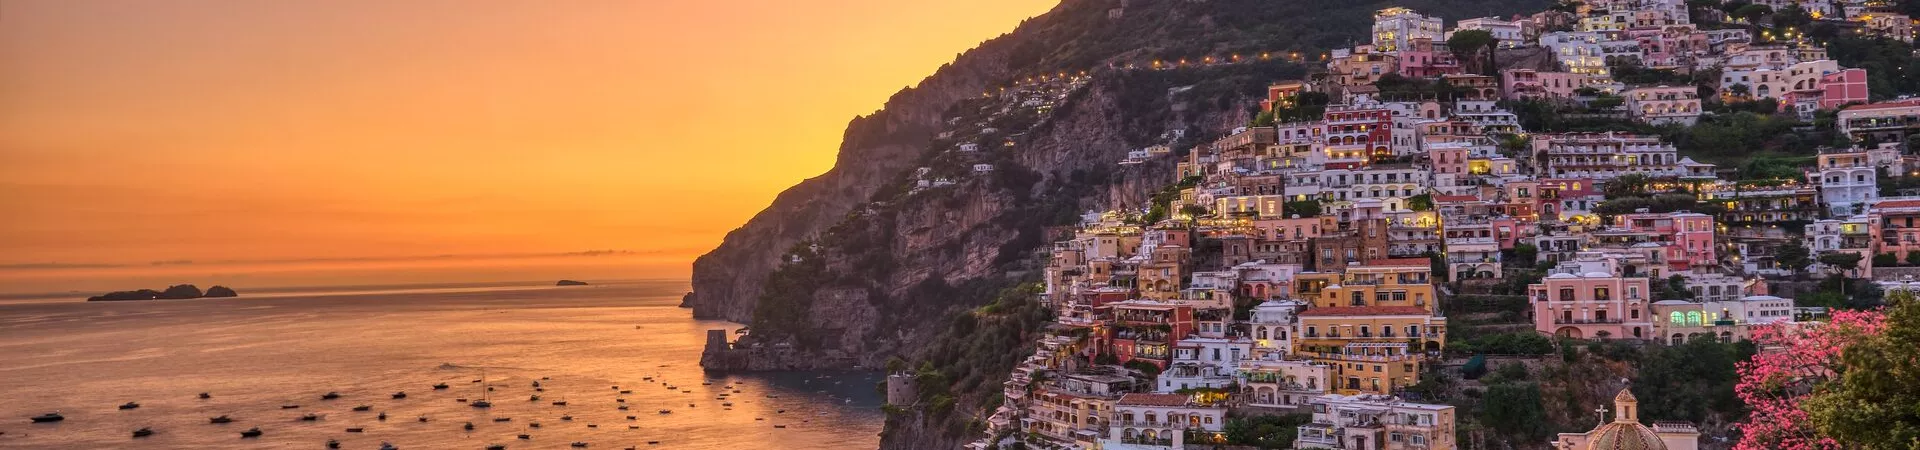 The famous village of Positano in the Italian Amalfi Coast by sunset